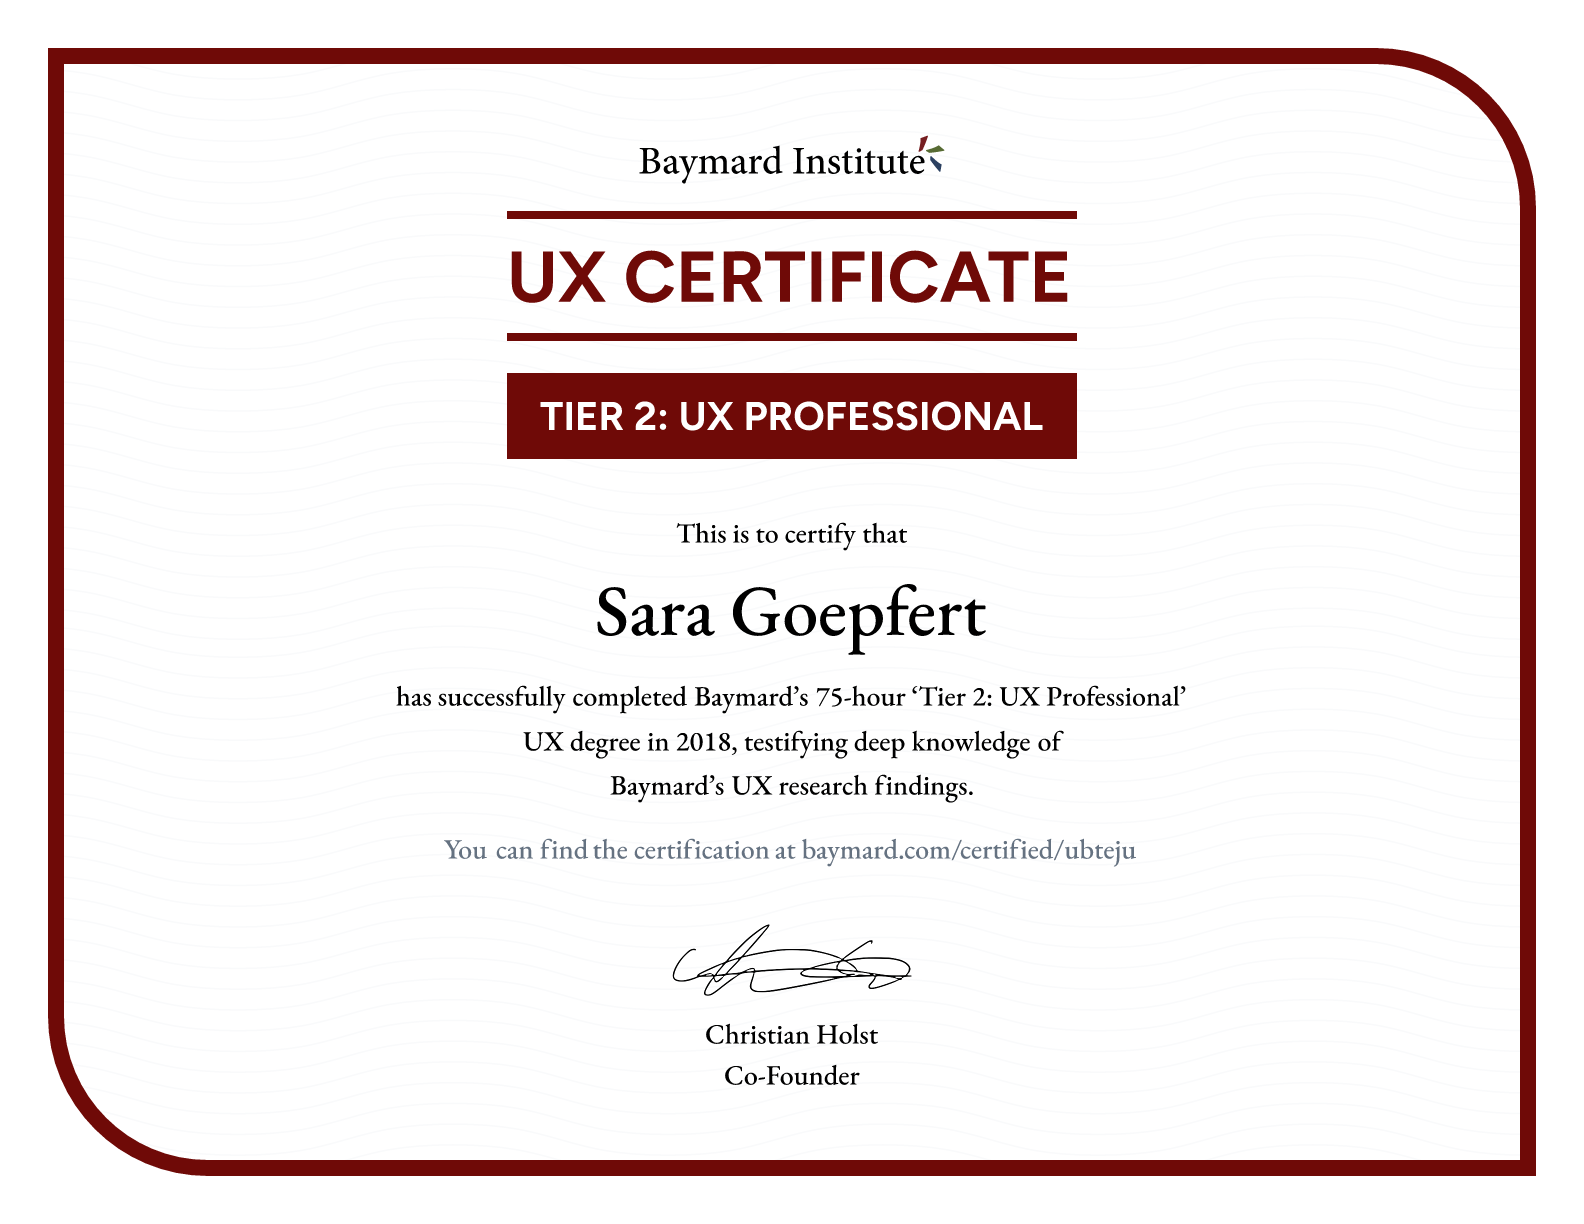 Sara Goepfert’s certificate